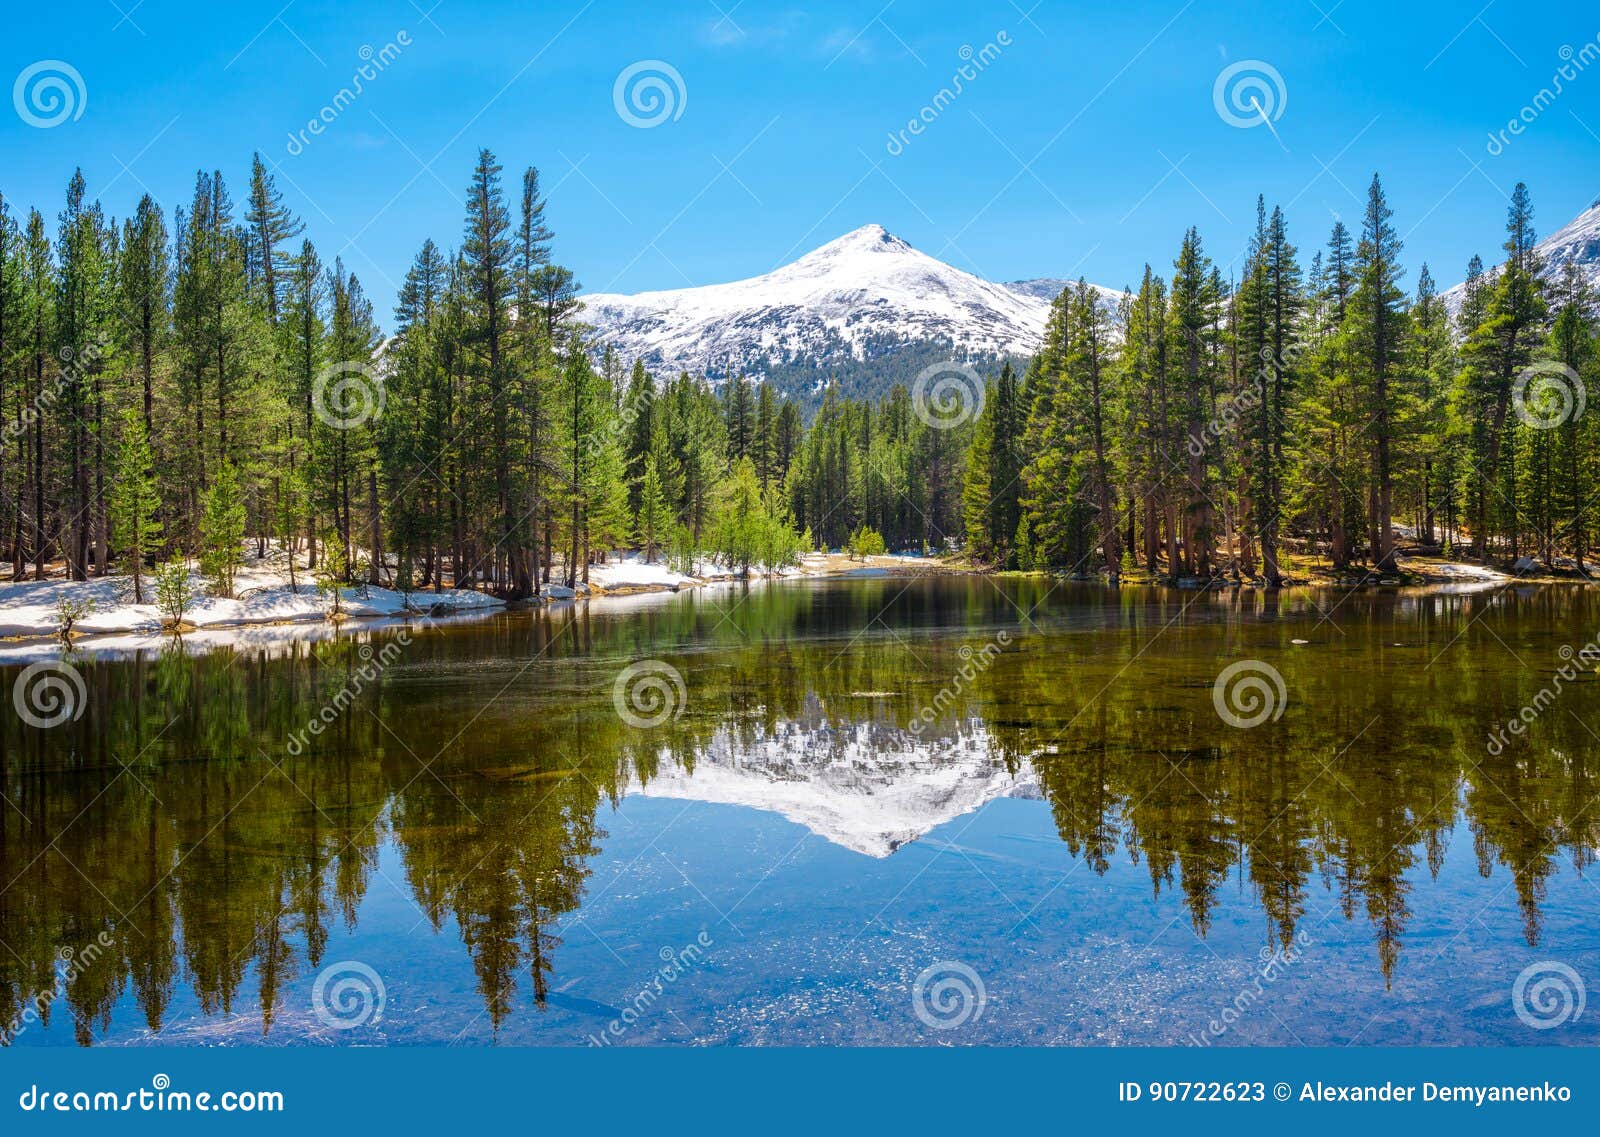 mirror lake - yosemite national park, california